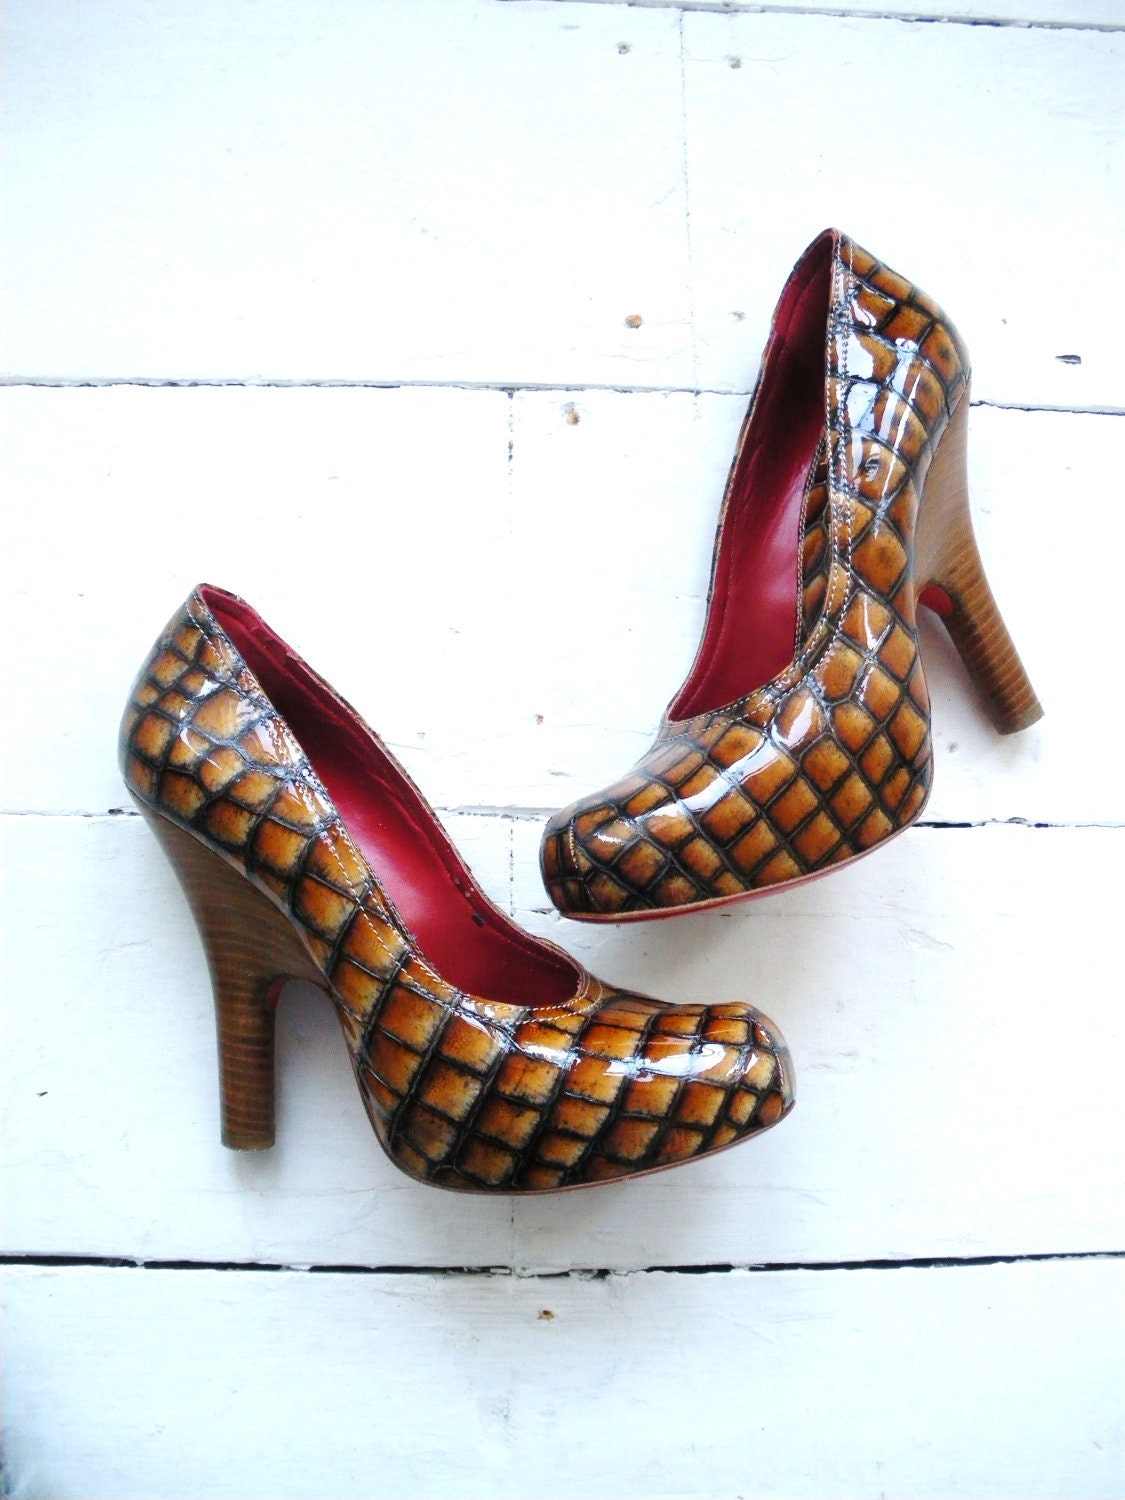 Vivienne Westwood leather hidden platform elevator pumps courts shoes 4 37 6.5 7 RED soles - shmooozin